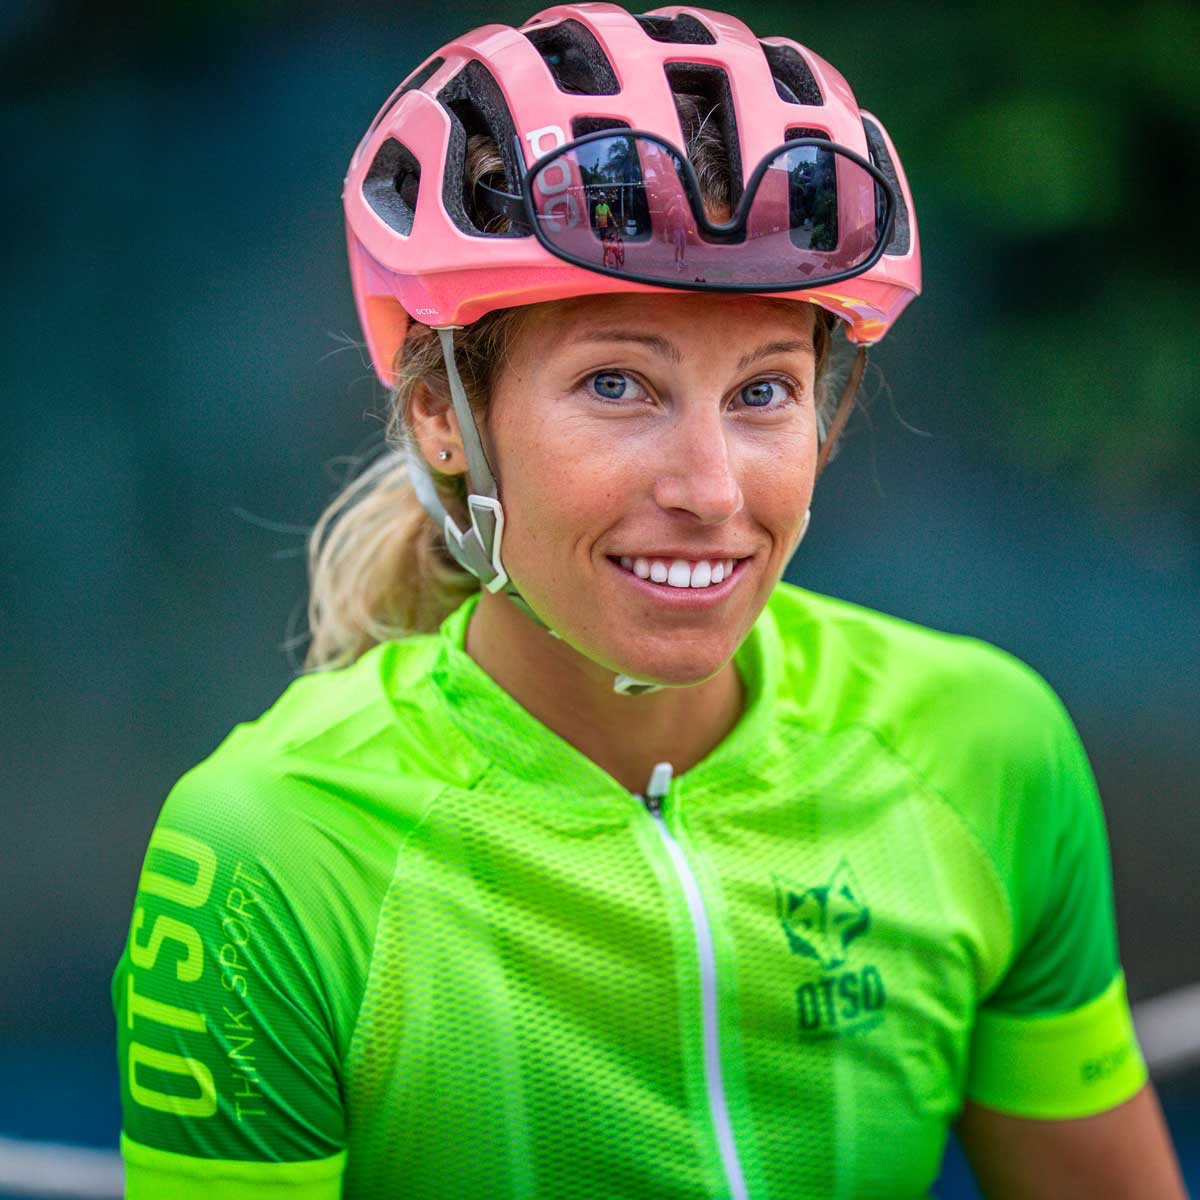 Women's Short Sleeve Cycling Jersey Fluo Green